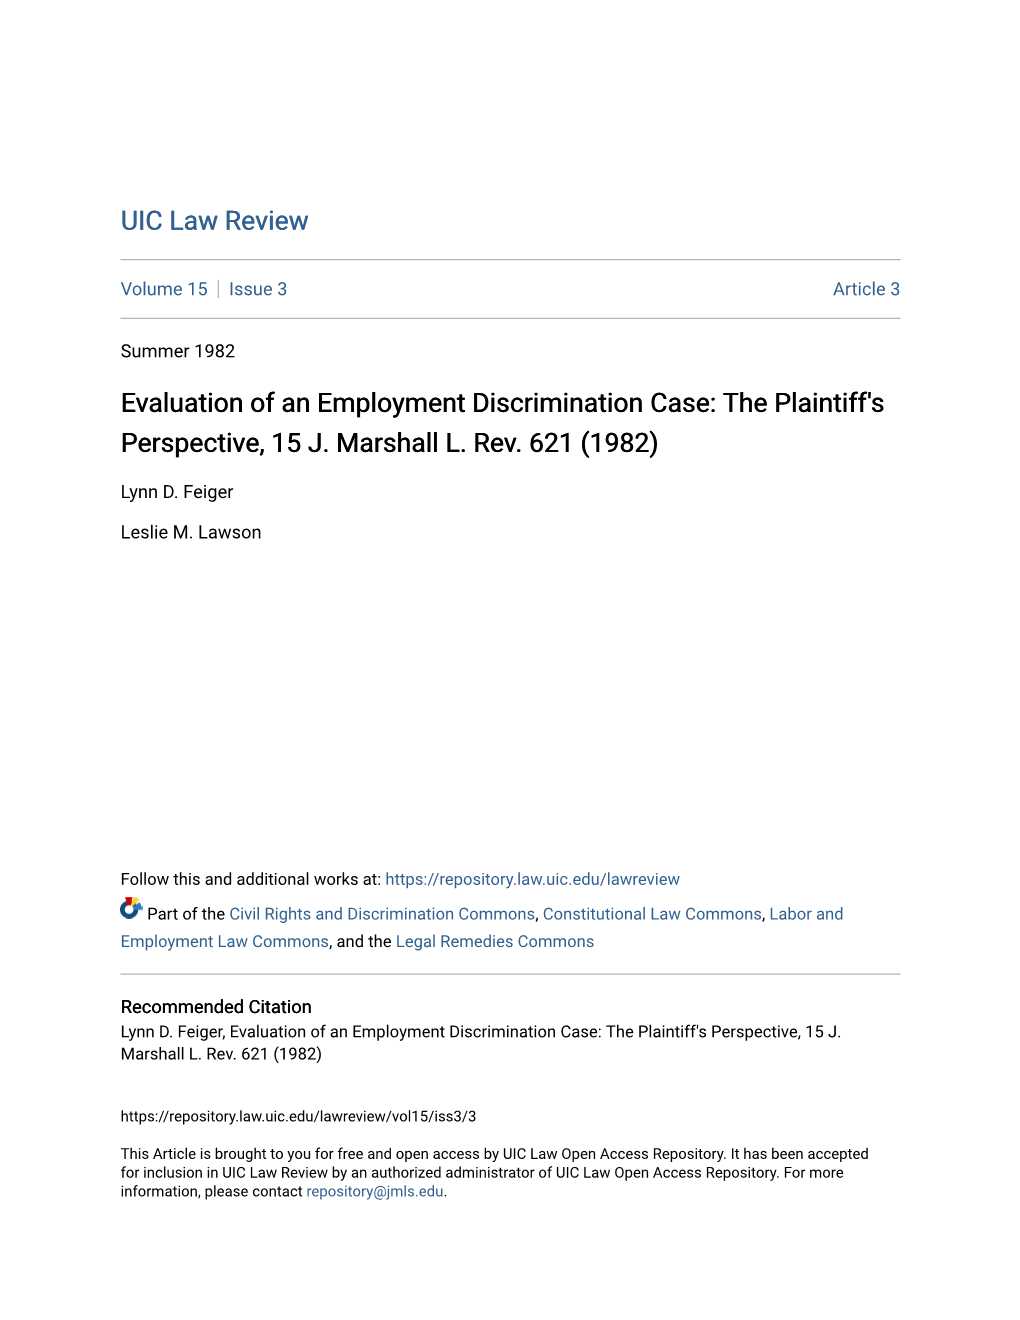 Evaluation of an Employment Discrimination Case: the Plaintiff's Perspective, 15 J